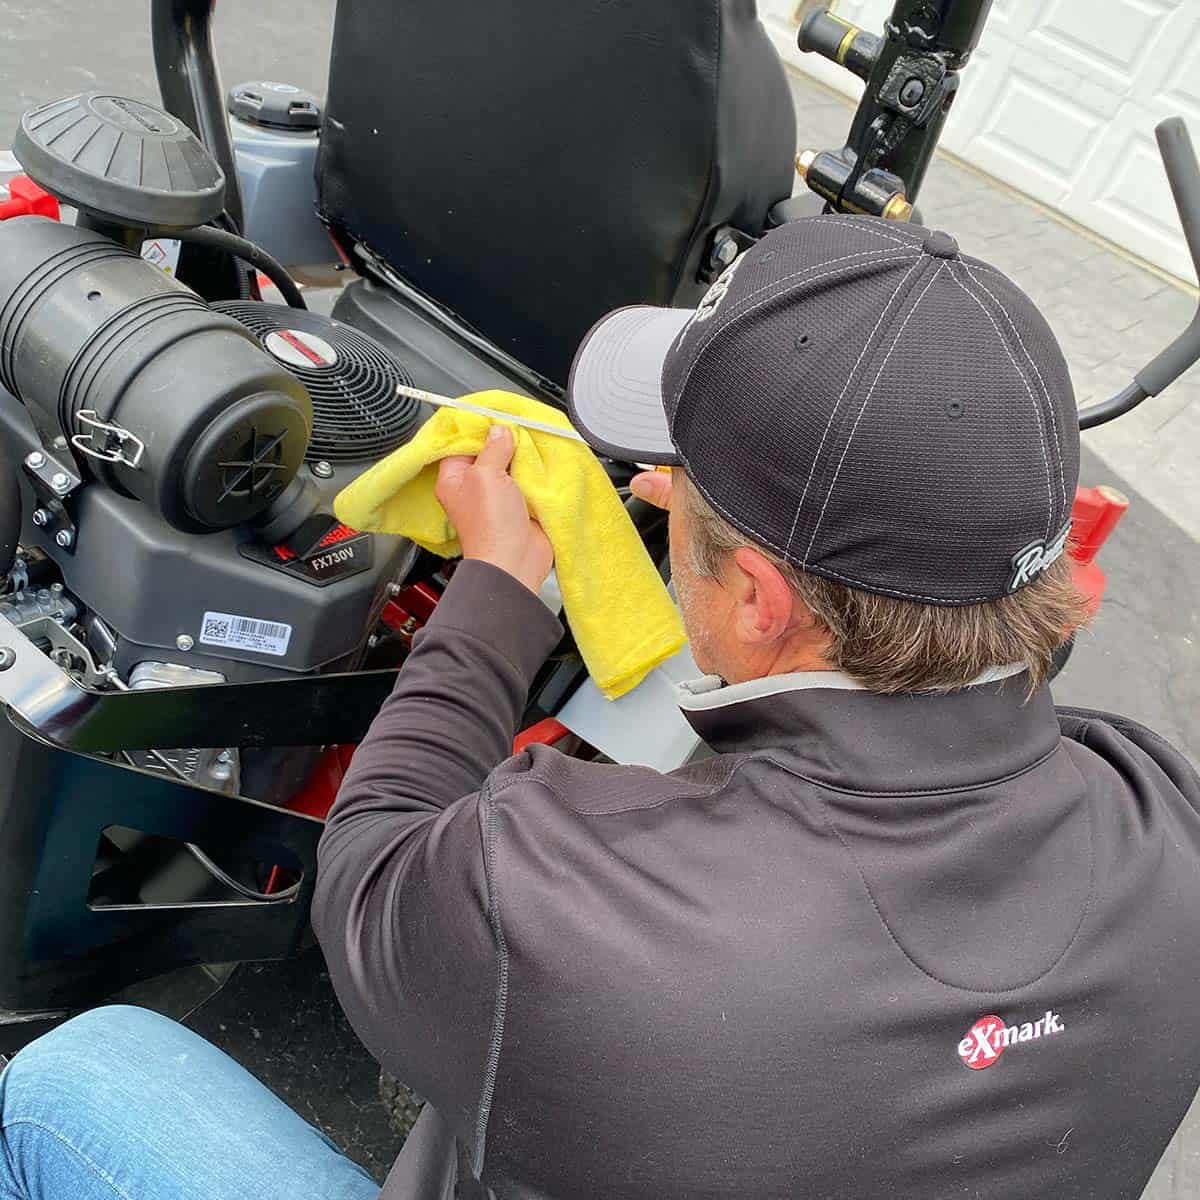 Joe performing maintenance on his Exmark mower